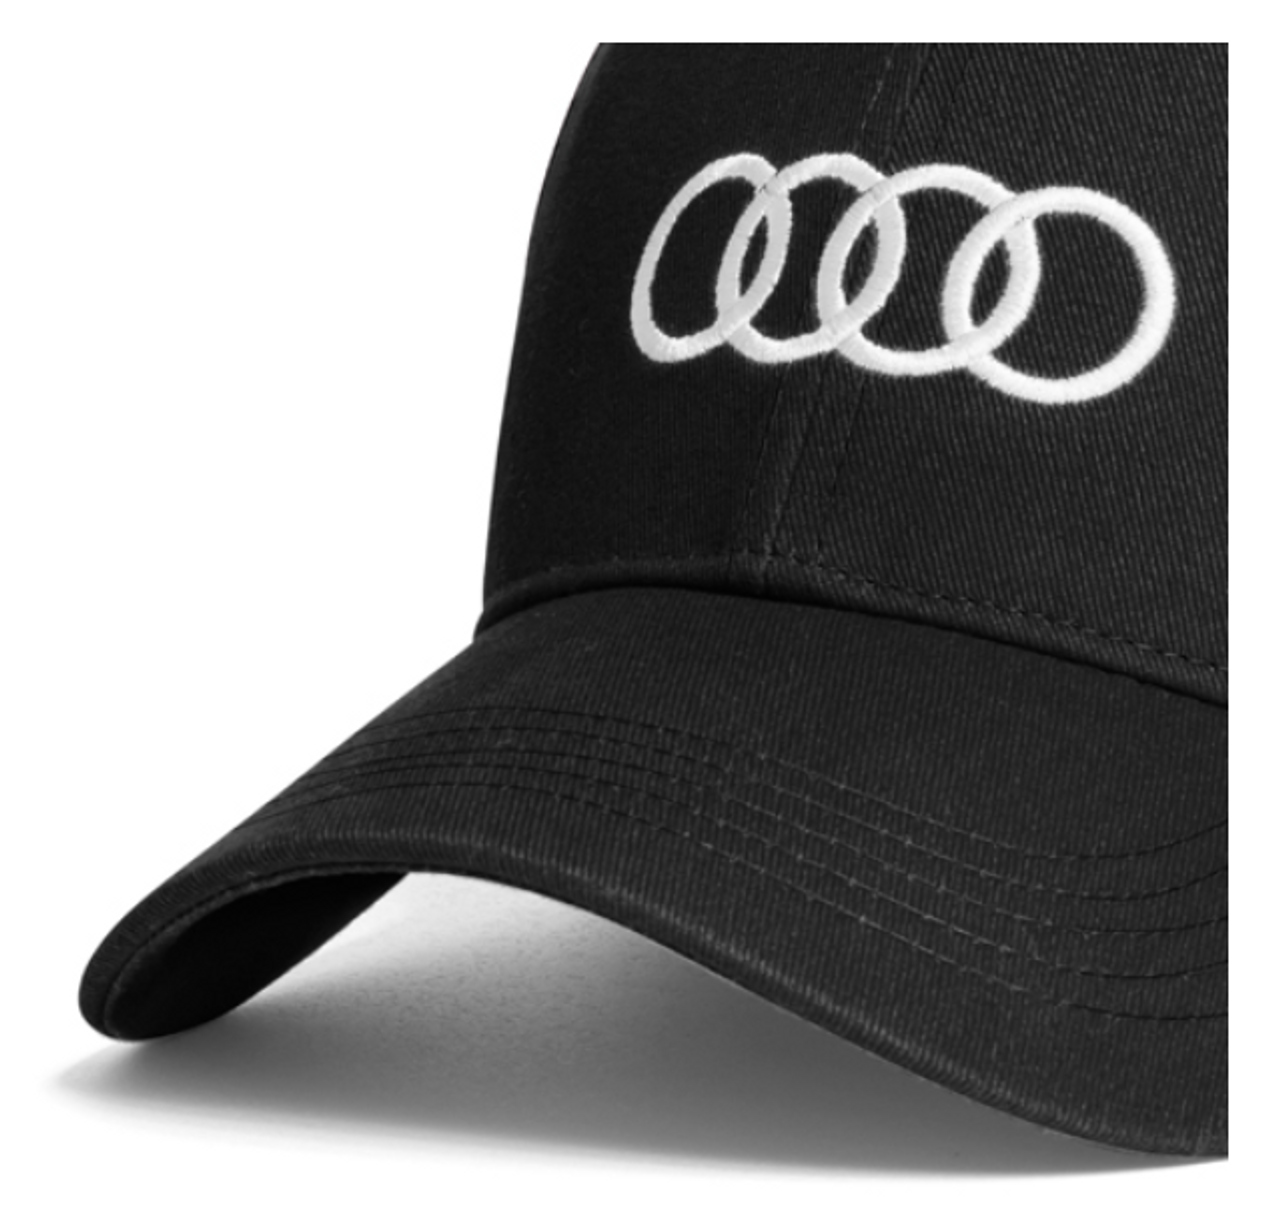 Genuine Audi Baseball Cap, black, Four Rings collection